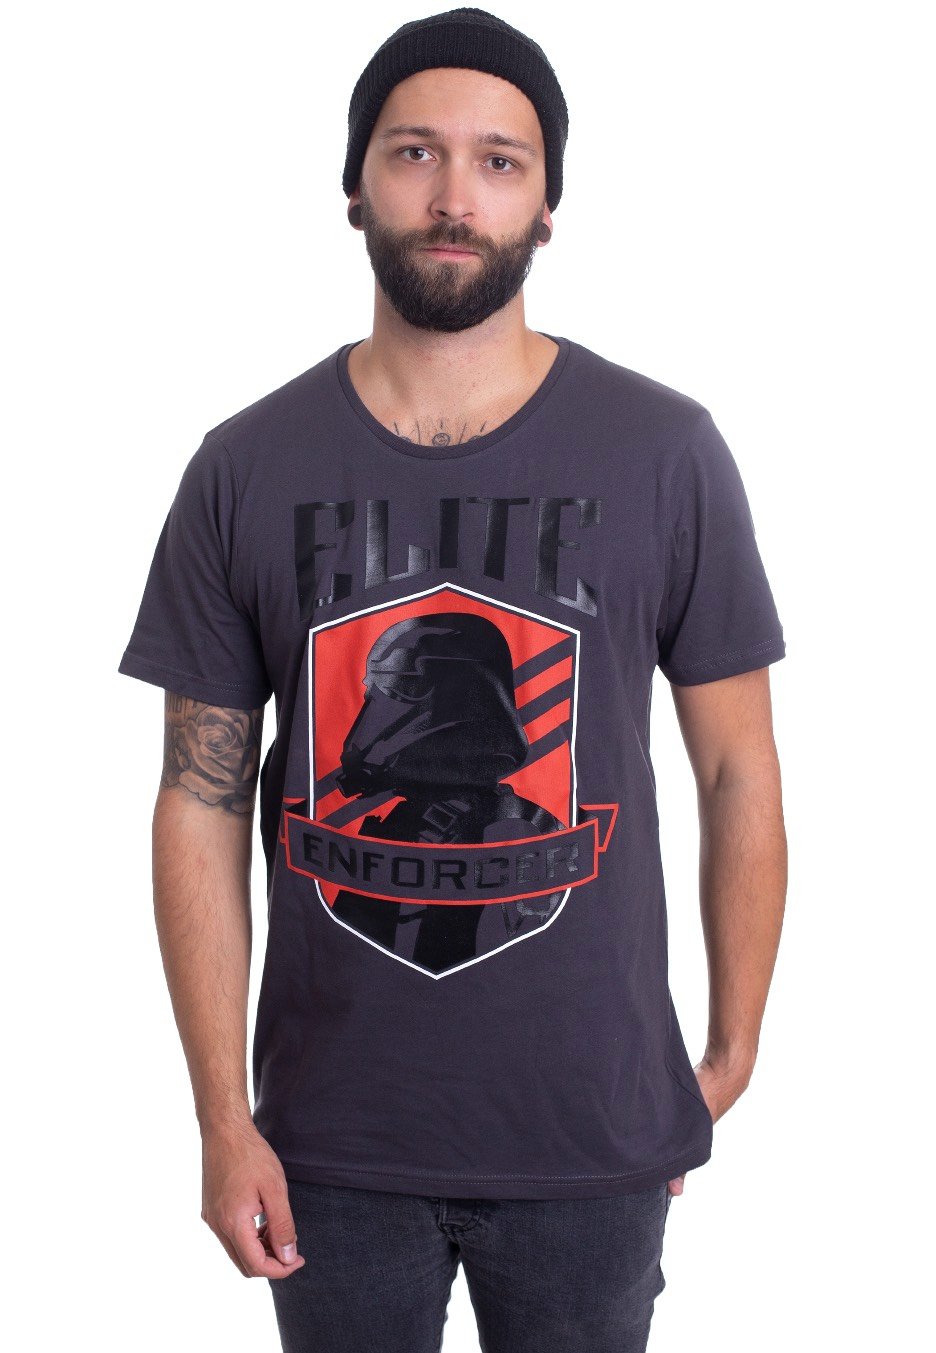 Star Wars - Elite Enforcer Anthracite - T-Shirt